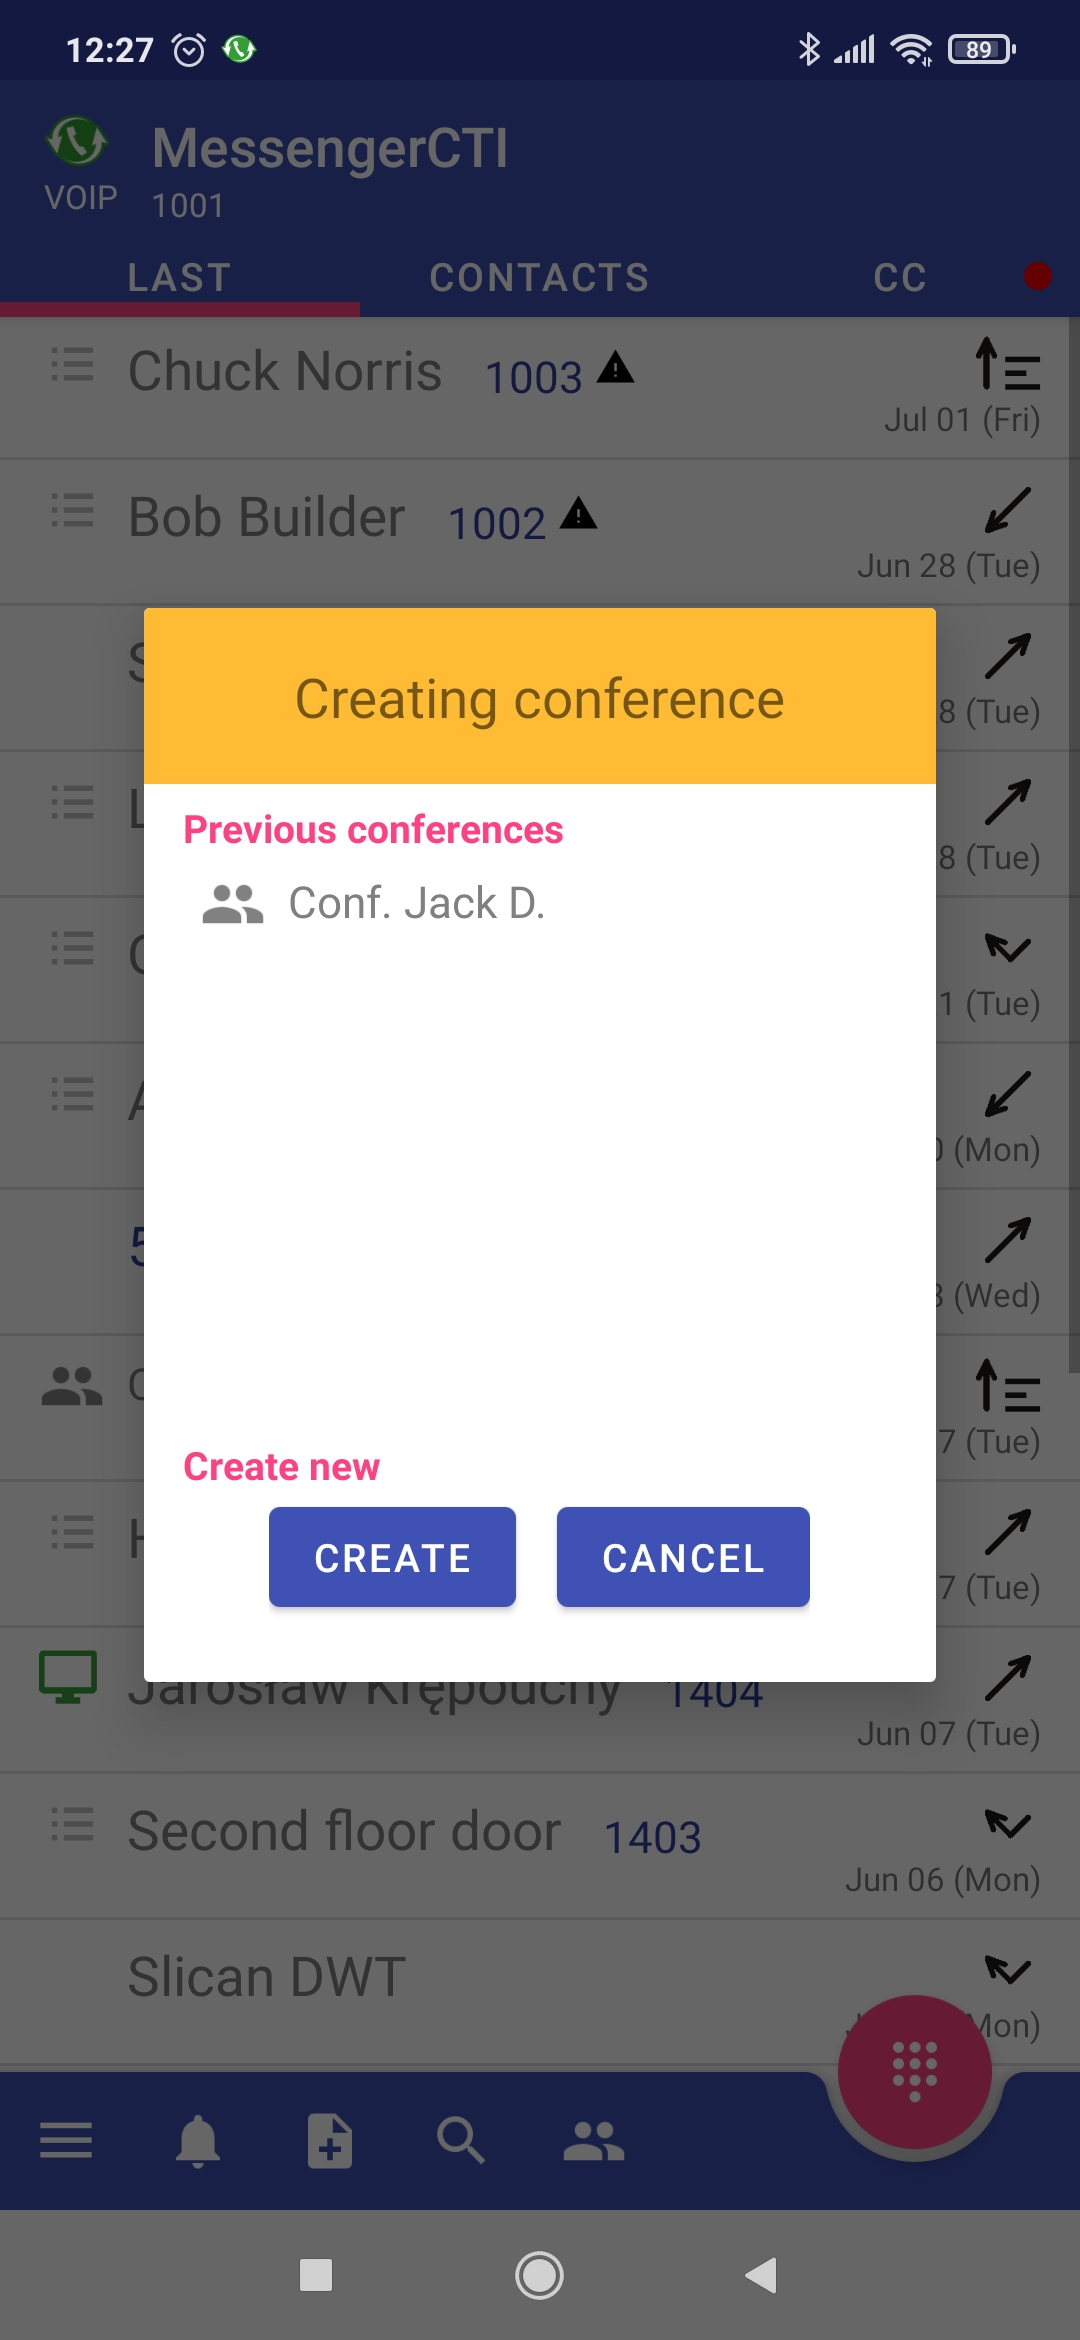 MessengerCTI.mobile 1.07 Conference1 en.png